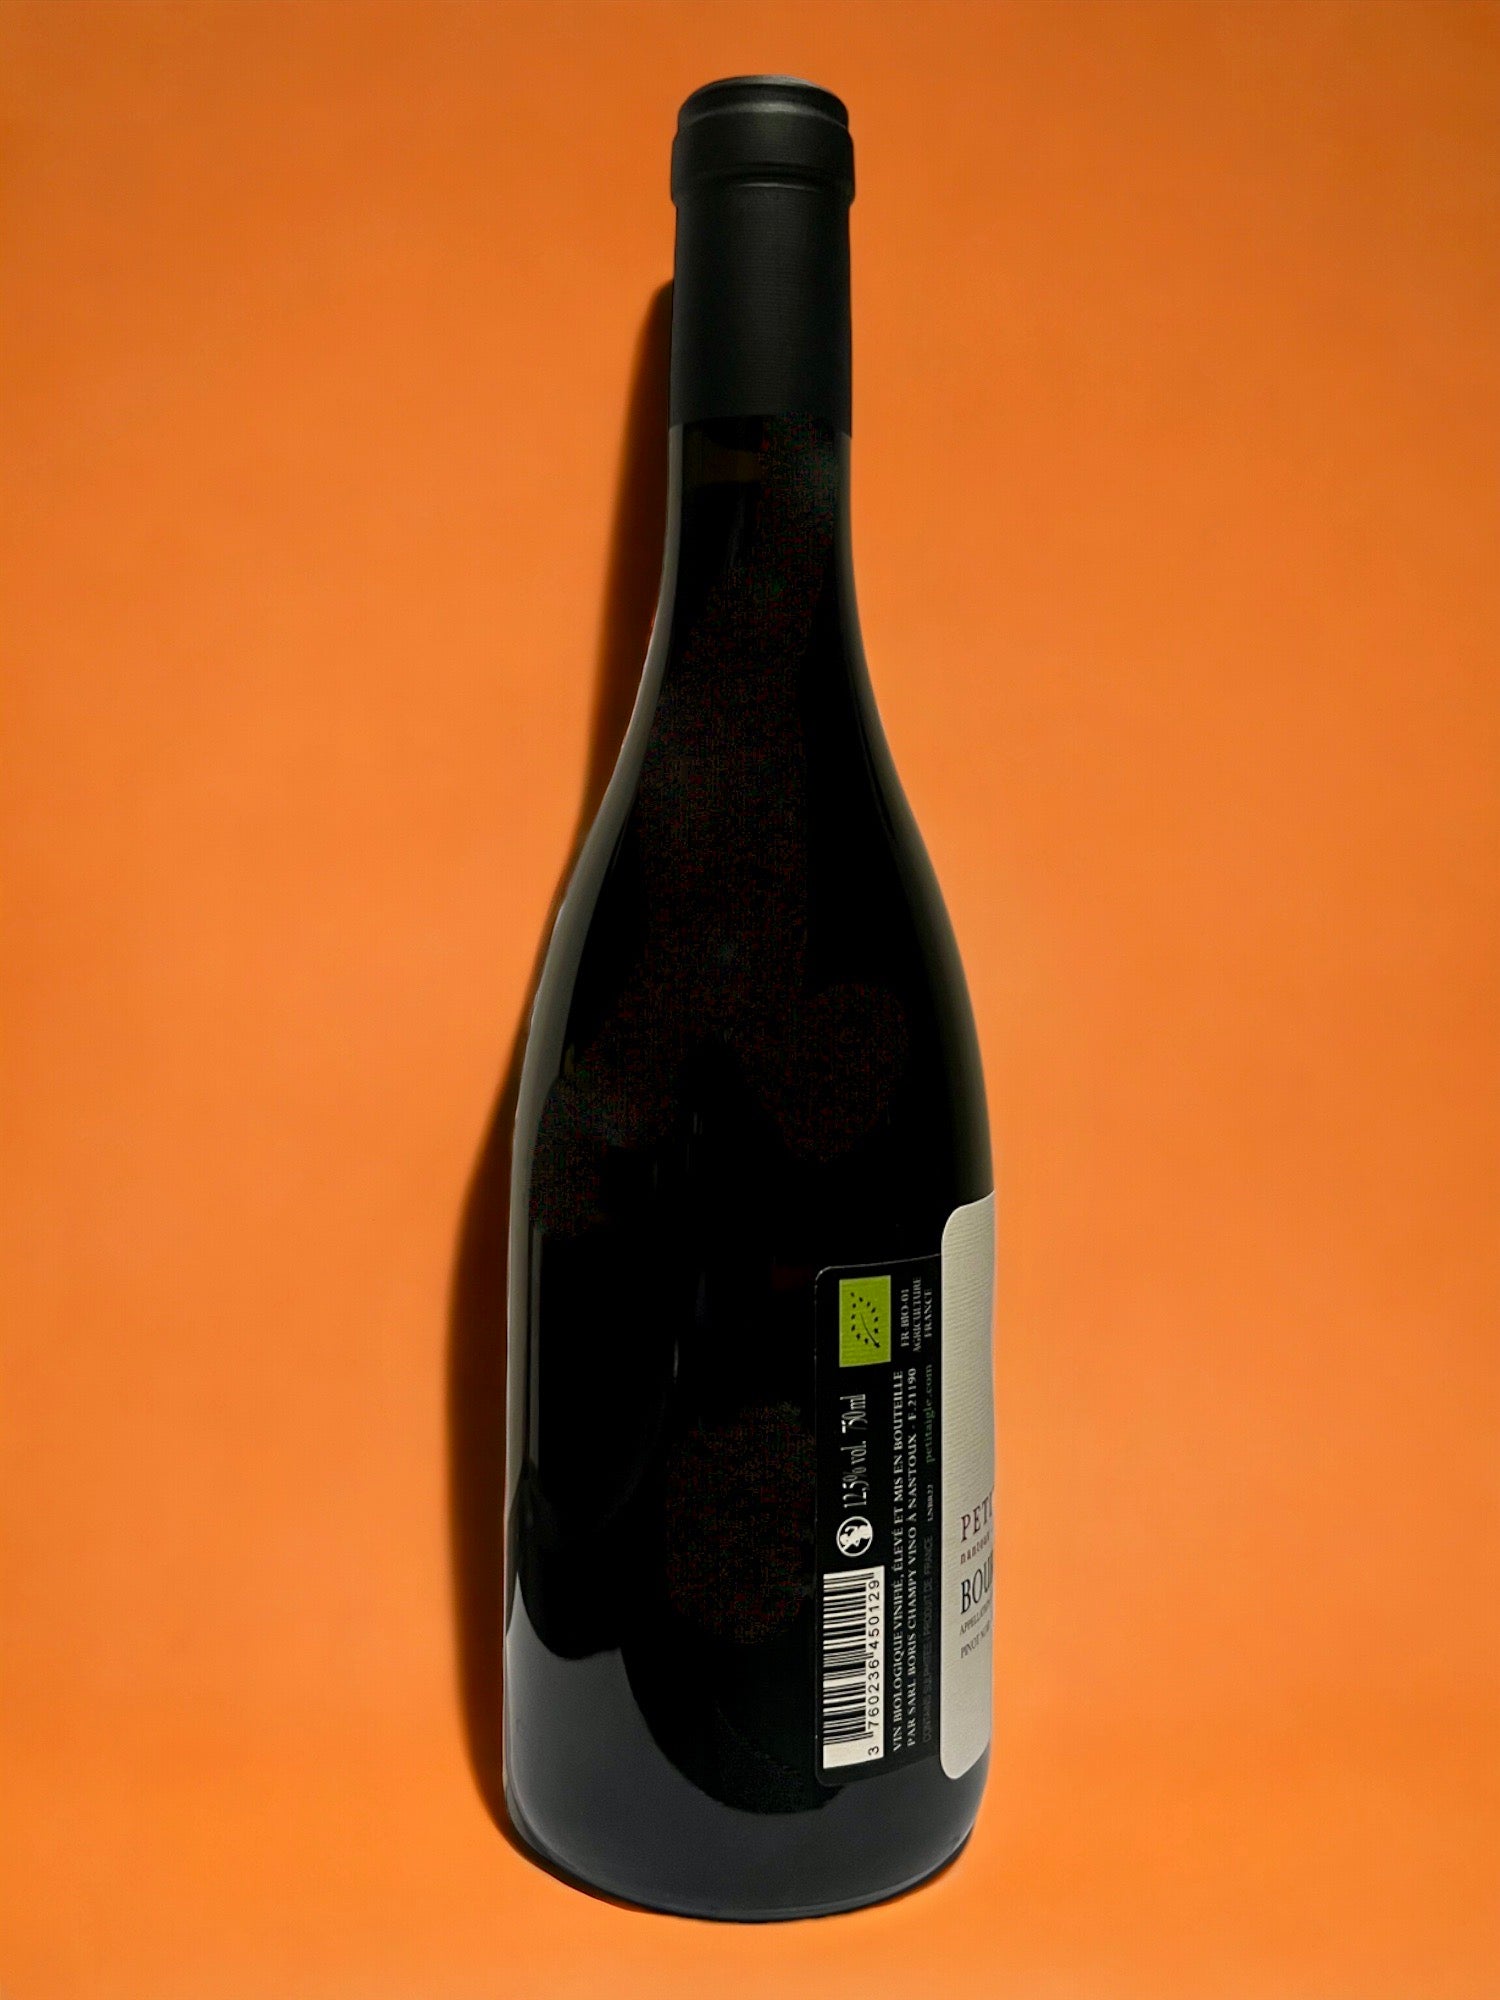 Petite Aigle Bourgogne Pinot Noir 2022